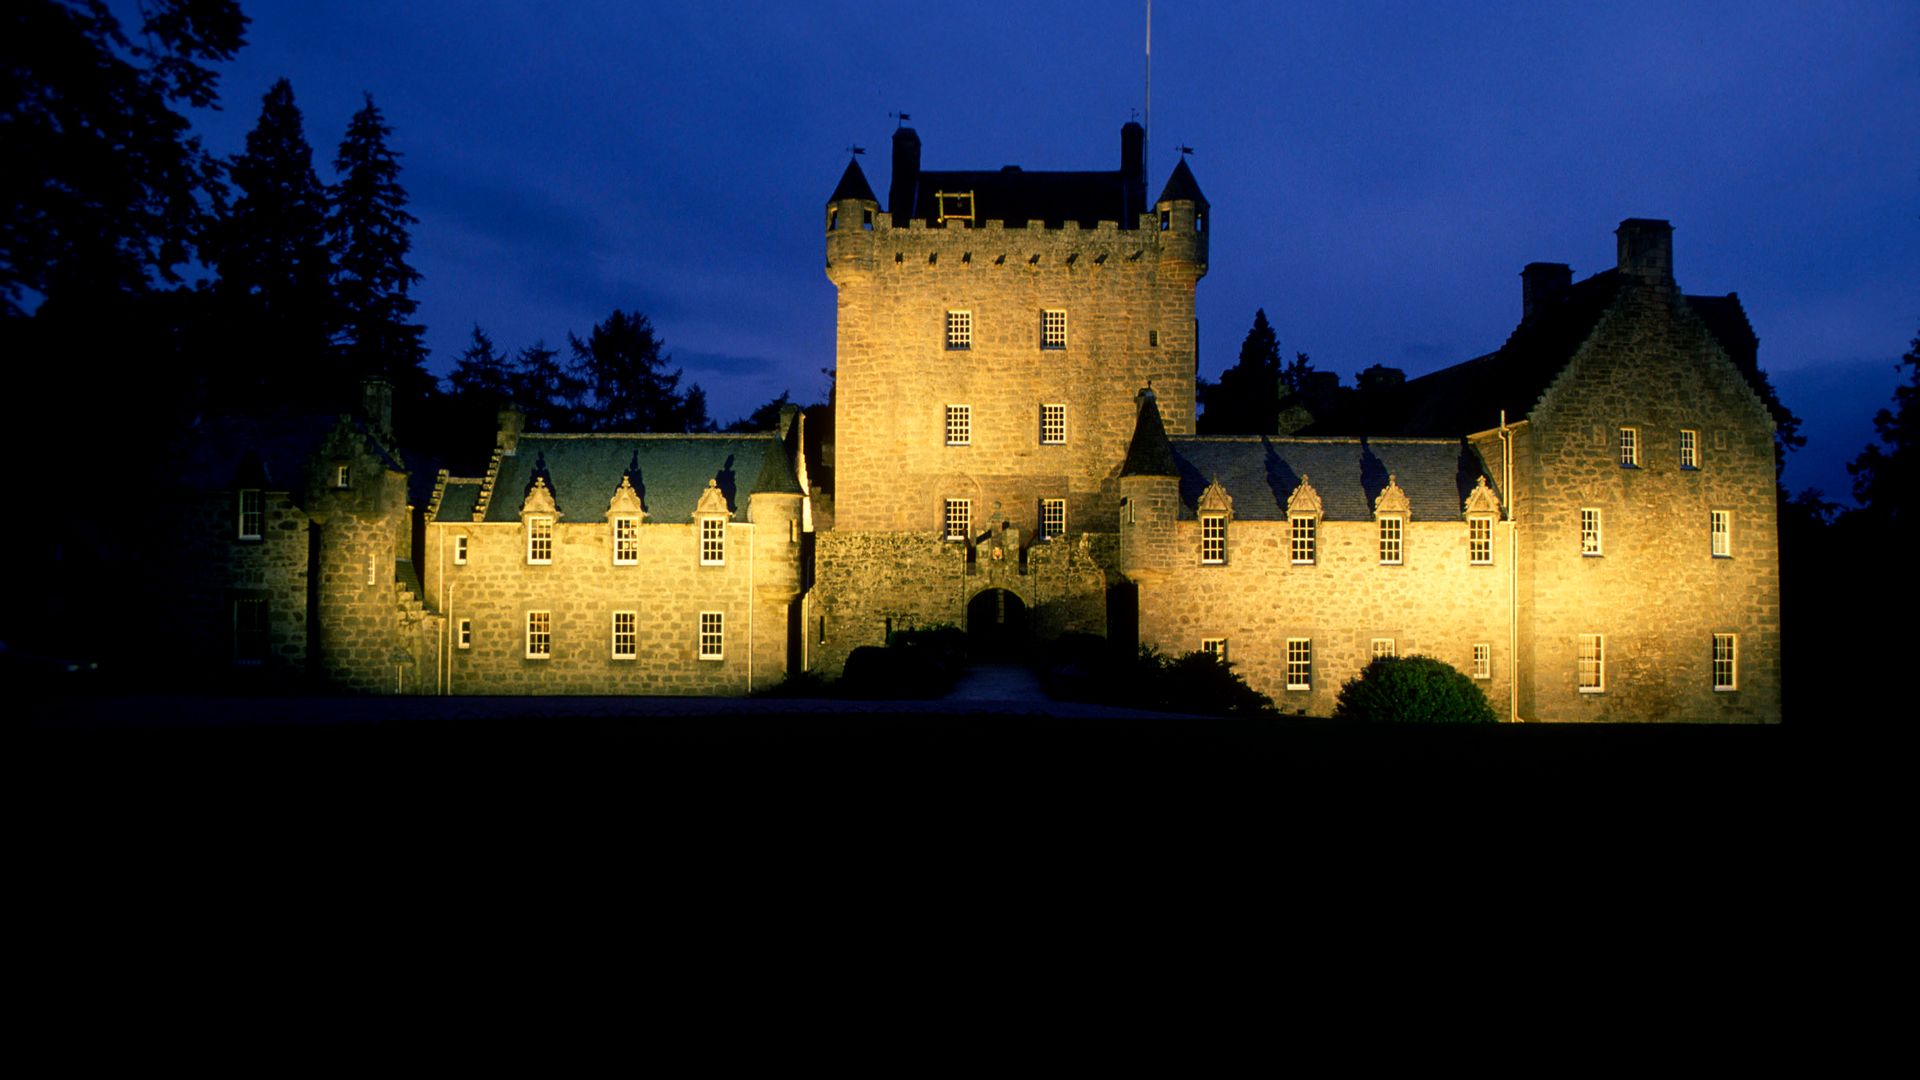 Cawdor Castle in Scotland